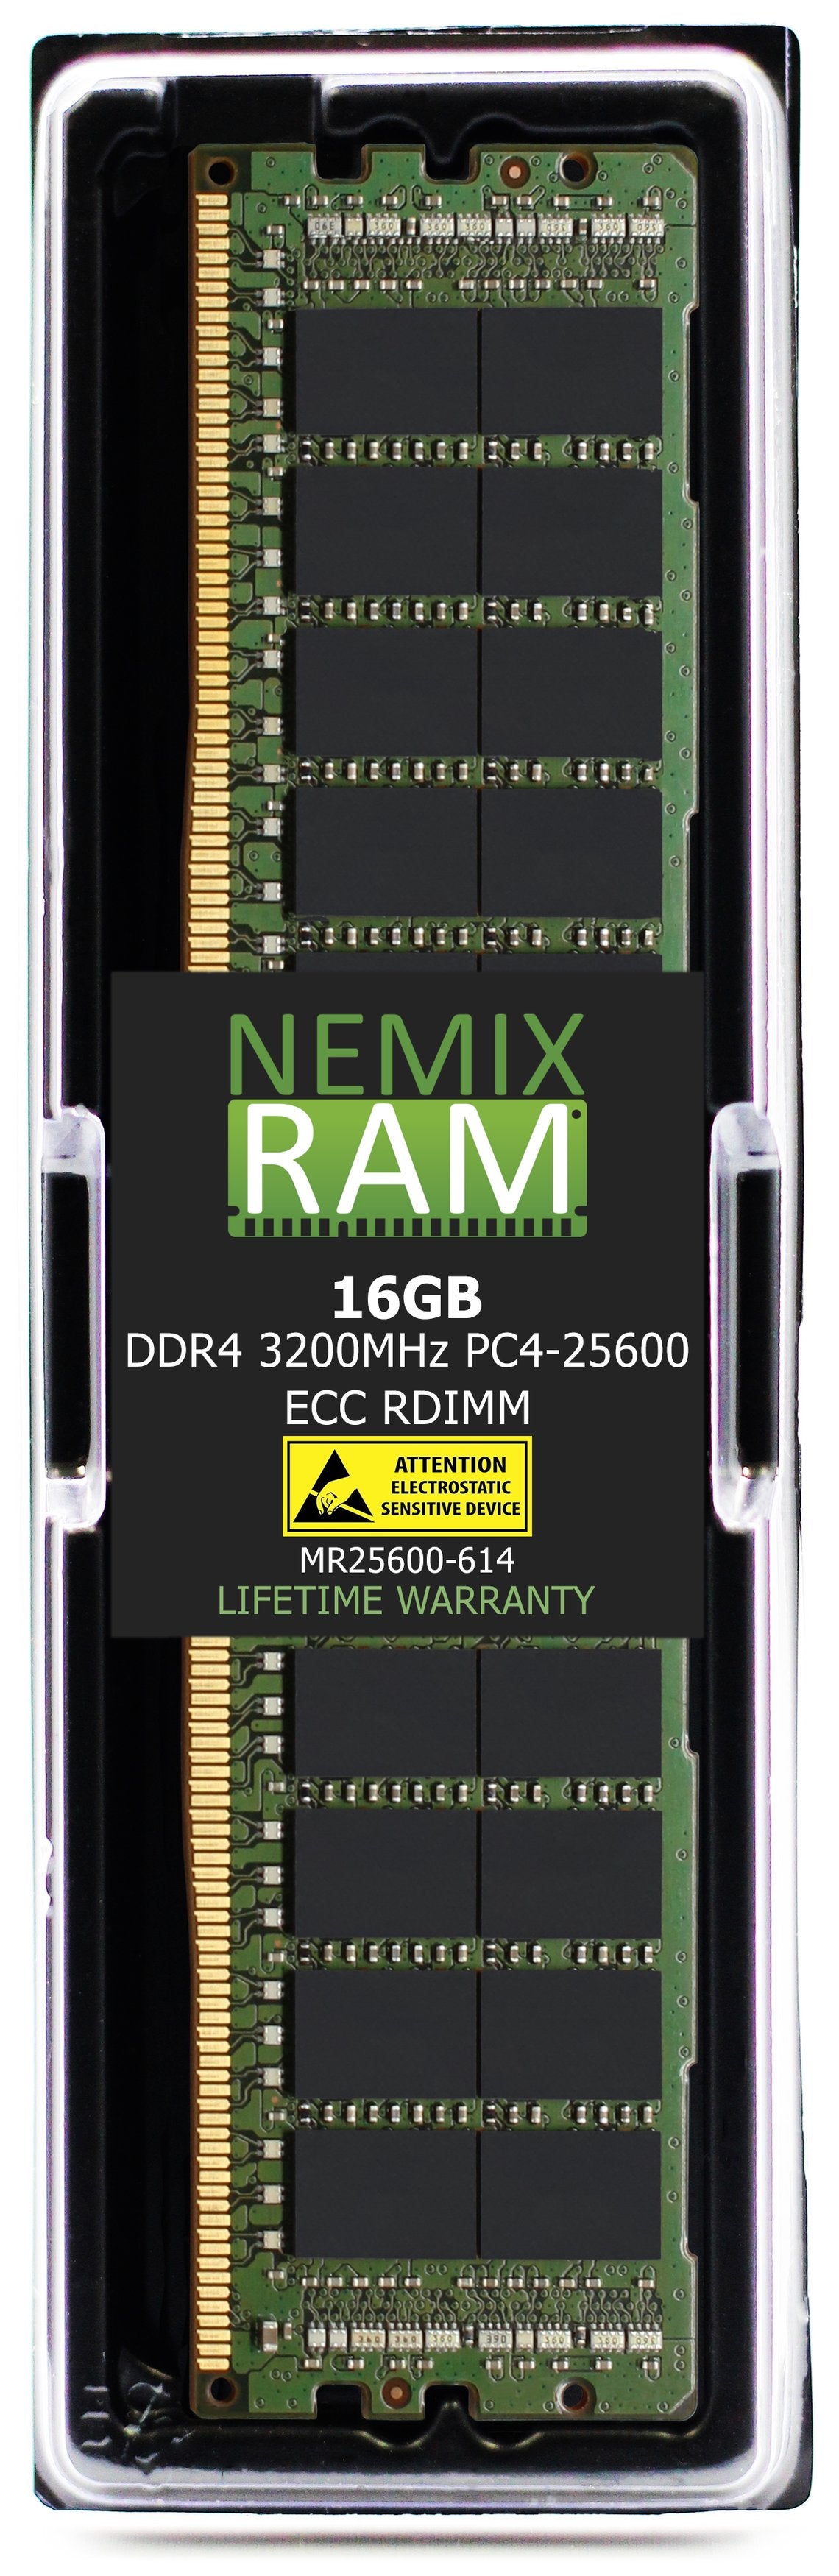 16GB DDR4 3200MHZ PC4-25600 RDIMM Compatible with Supermicro MEM-DR416L-SL01-ER32